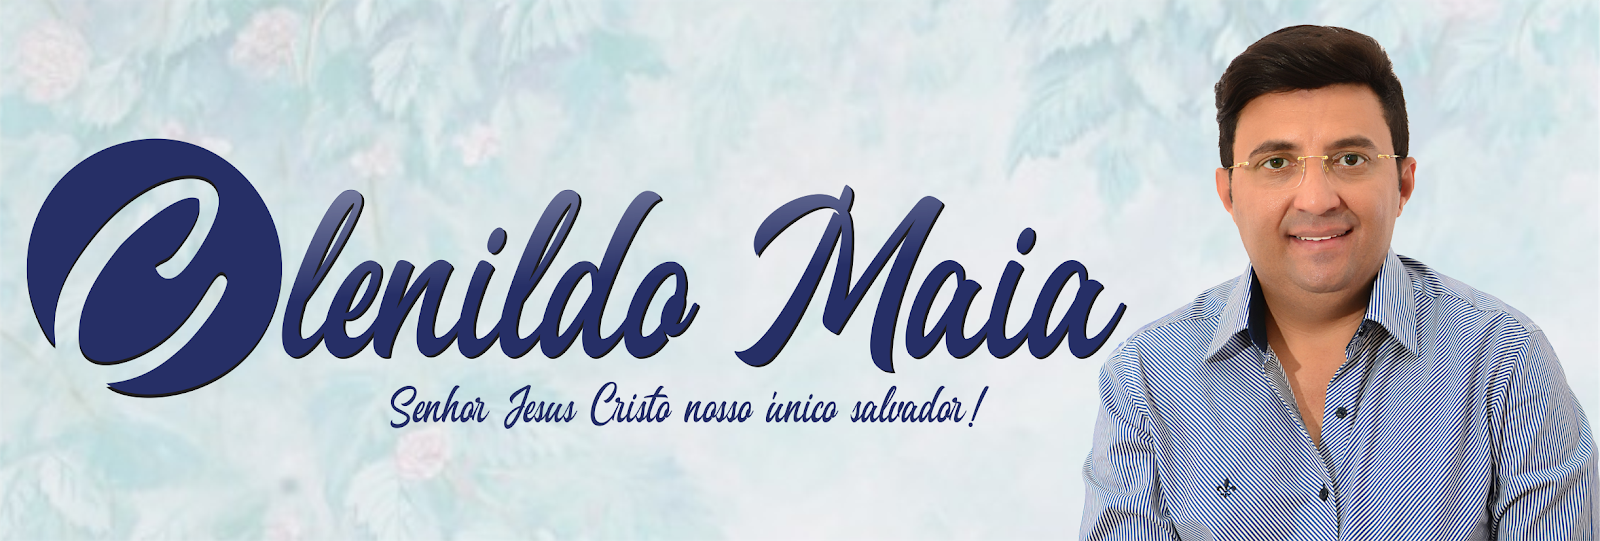 Clenildo Maia